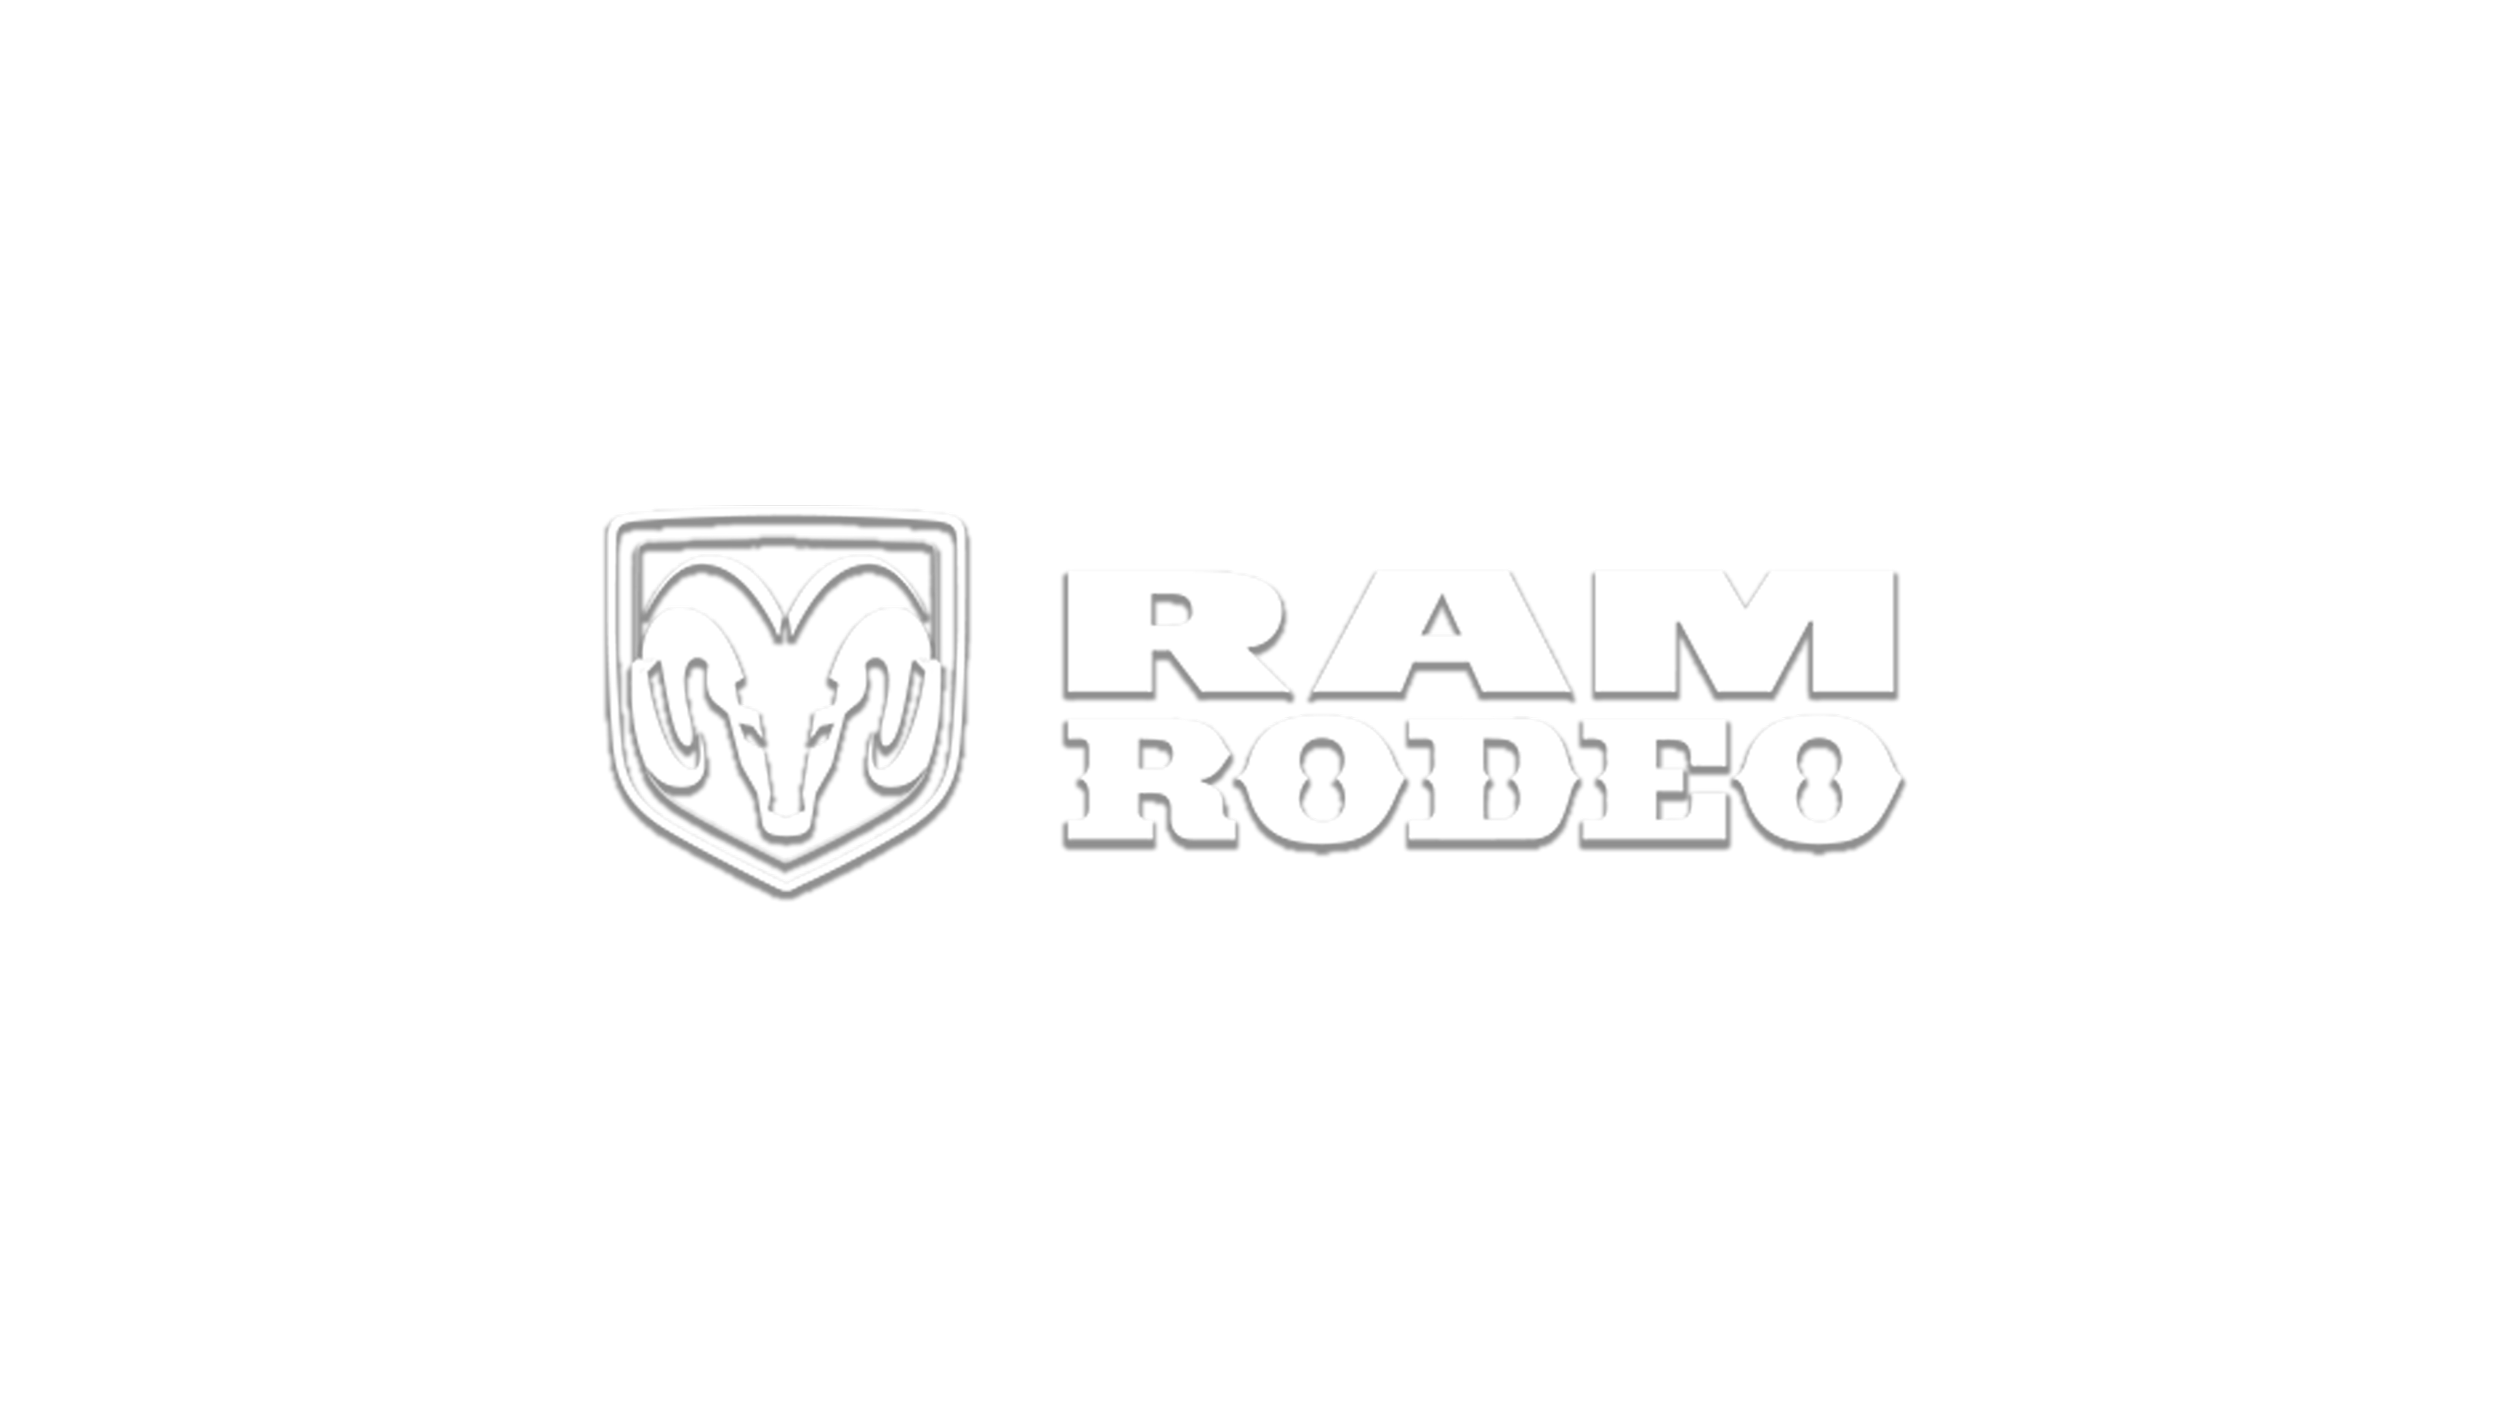 Smith_Pro_Rodeo_Website_Sponsor_LogosRam-Rodeo.png